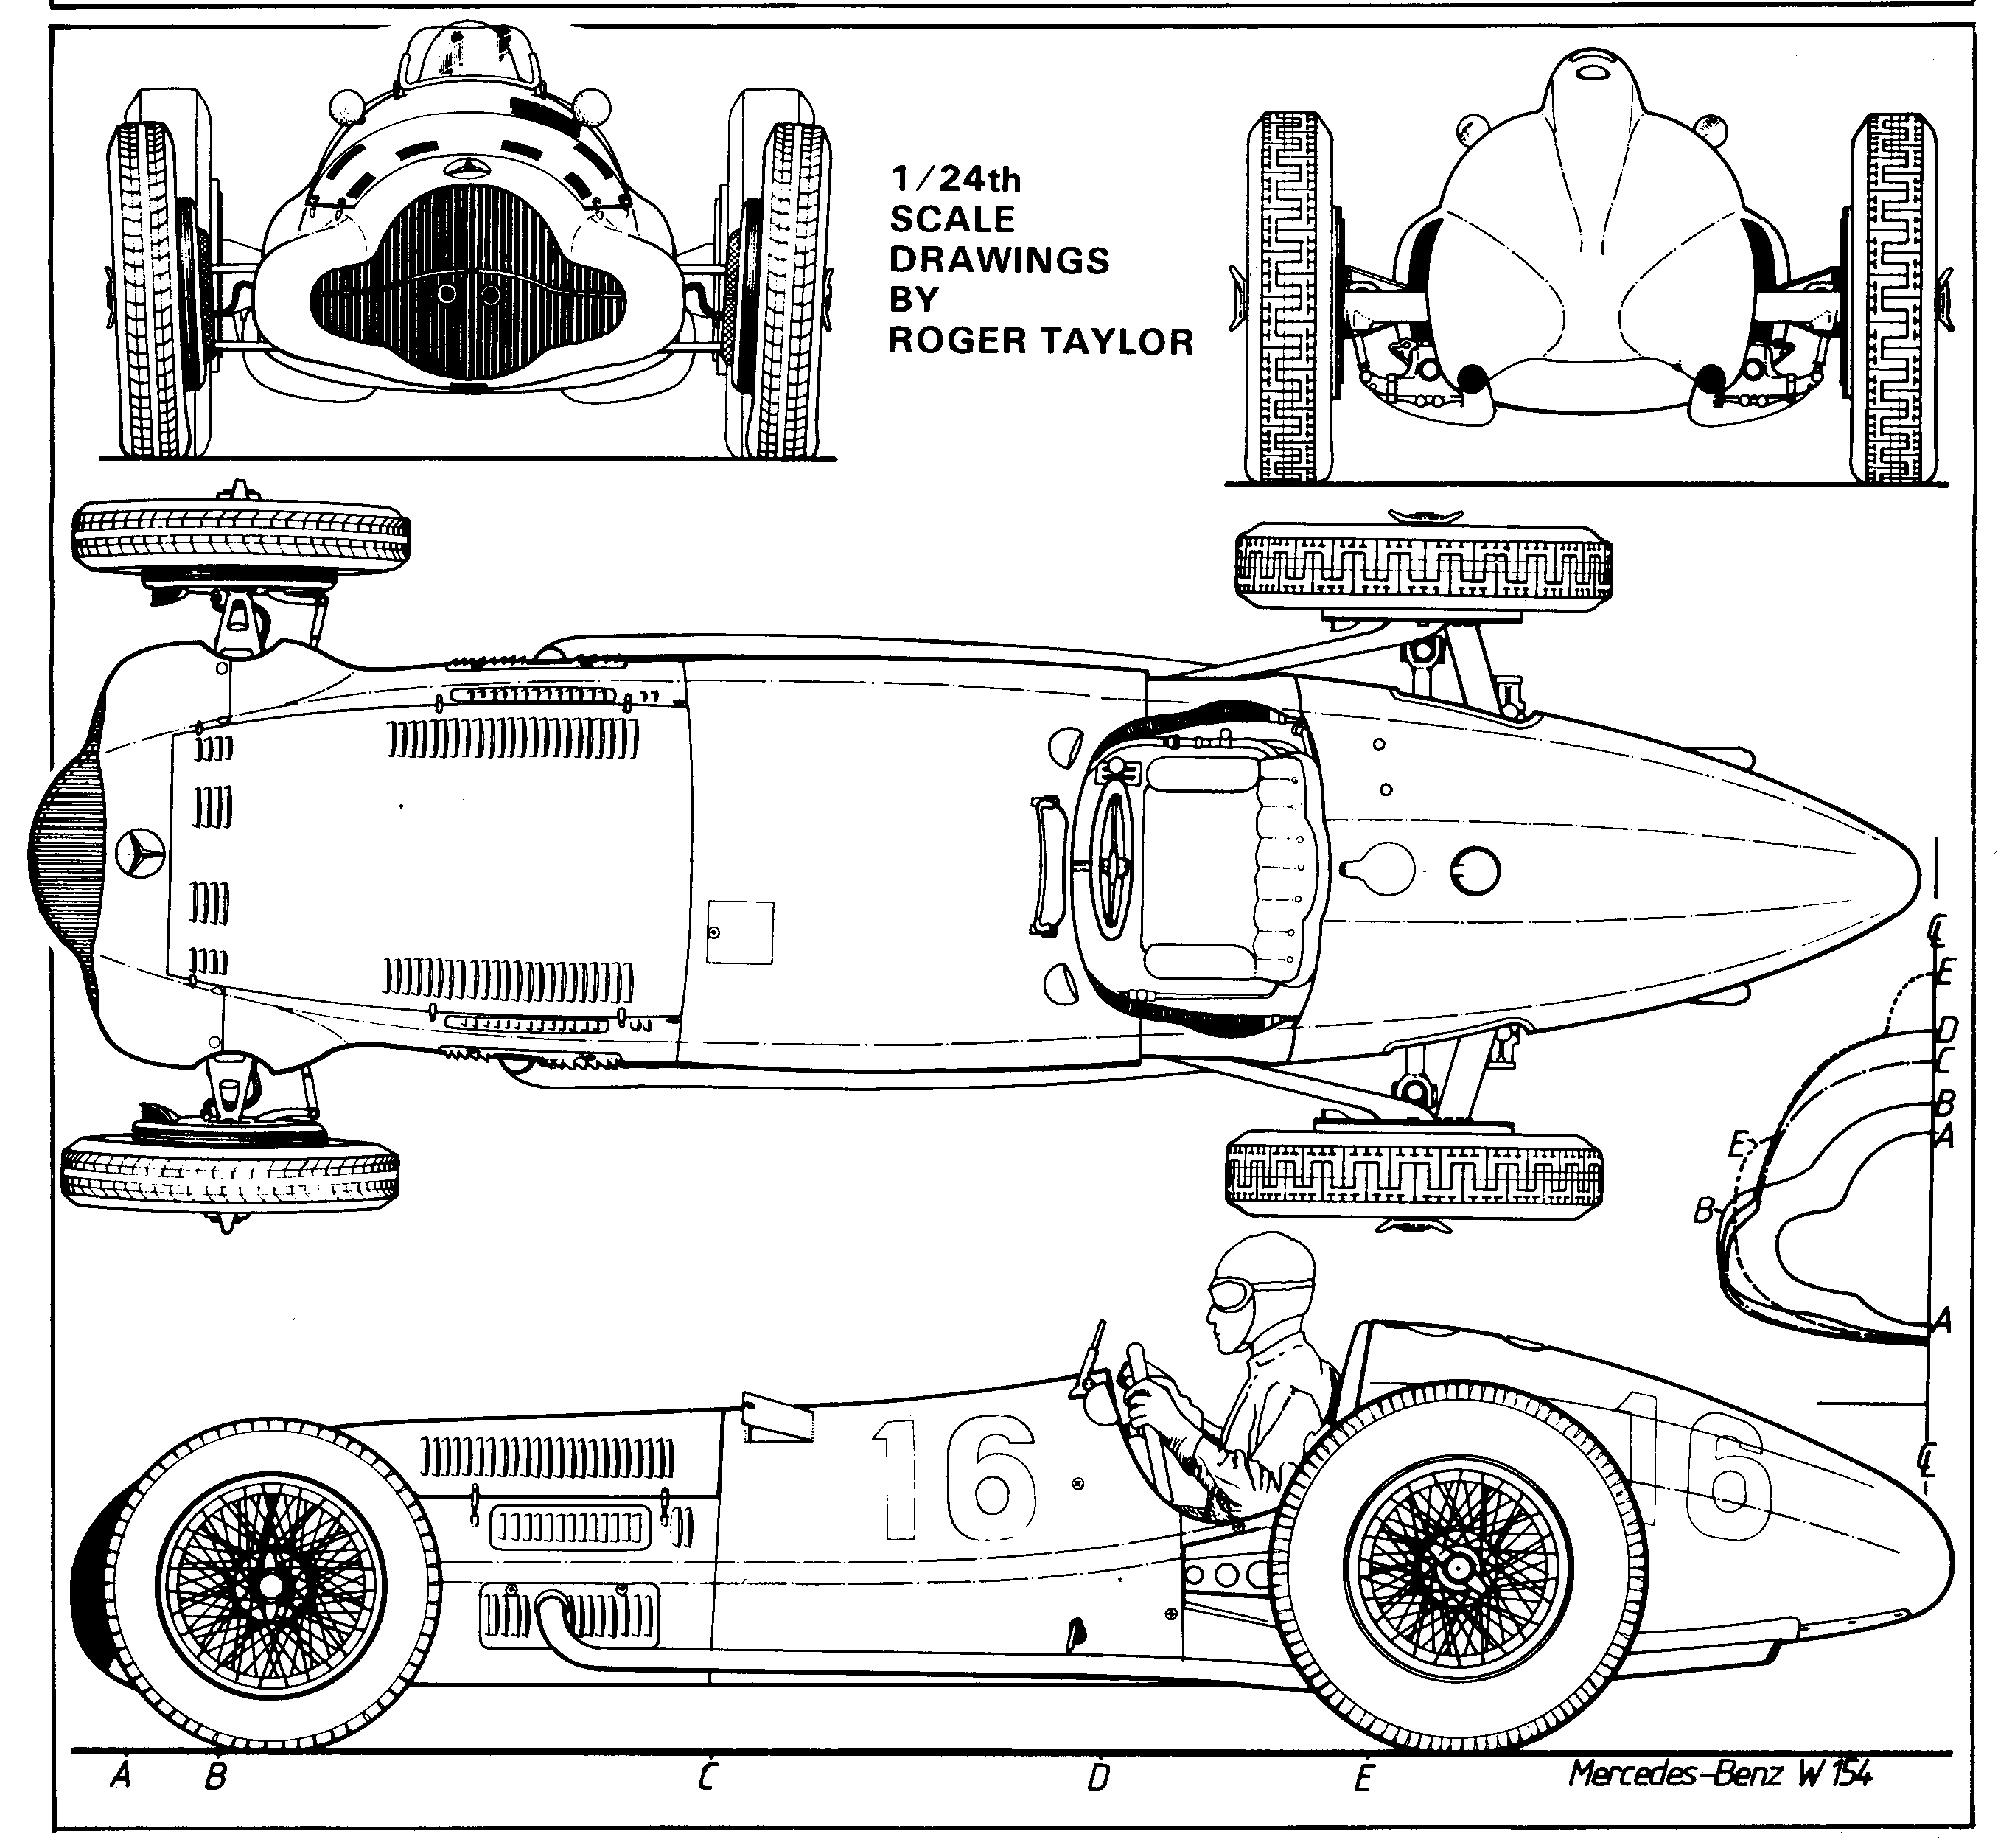 Mercedes-Benz W154 blueprint